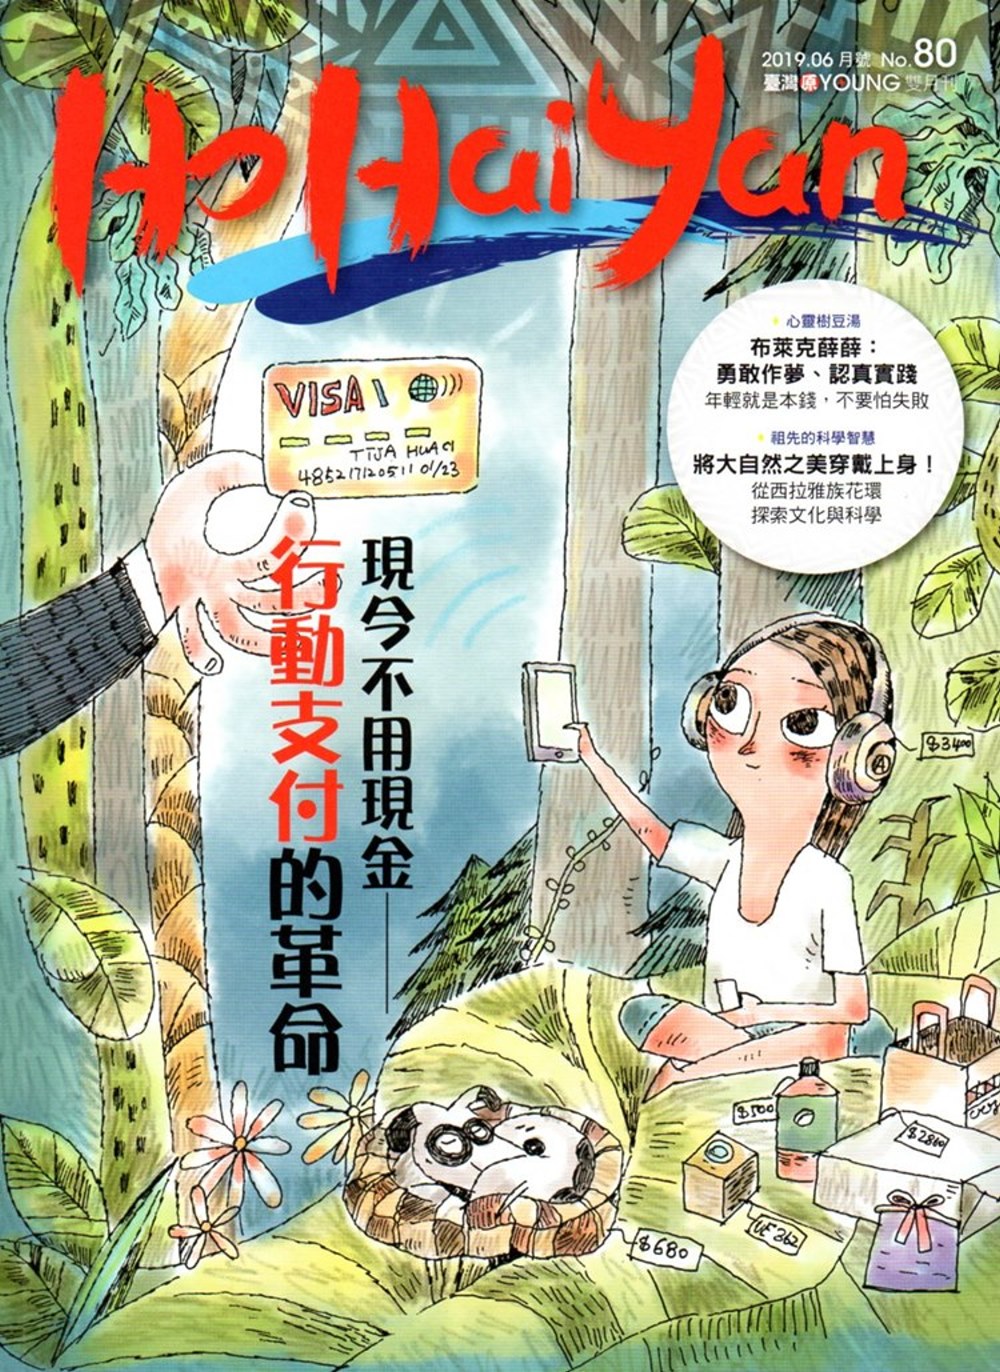 Ho Hai Yan台灣原YOUNG原住民青少年雜誌雙月刊2019.06 NO.80